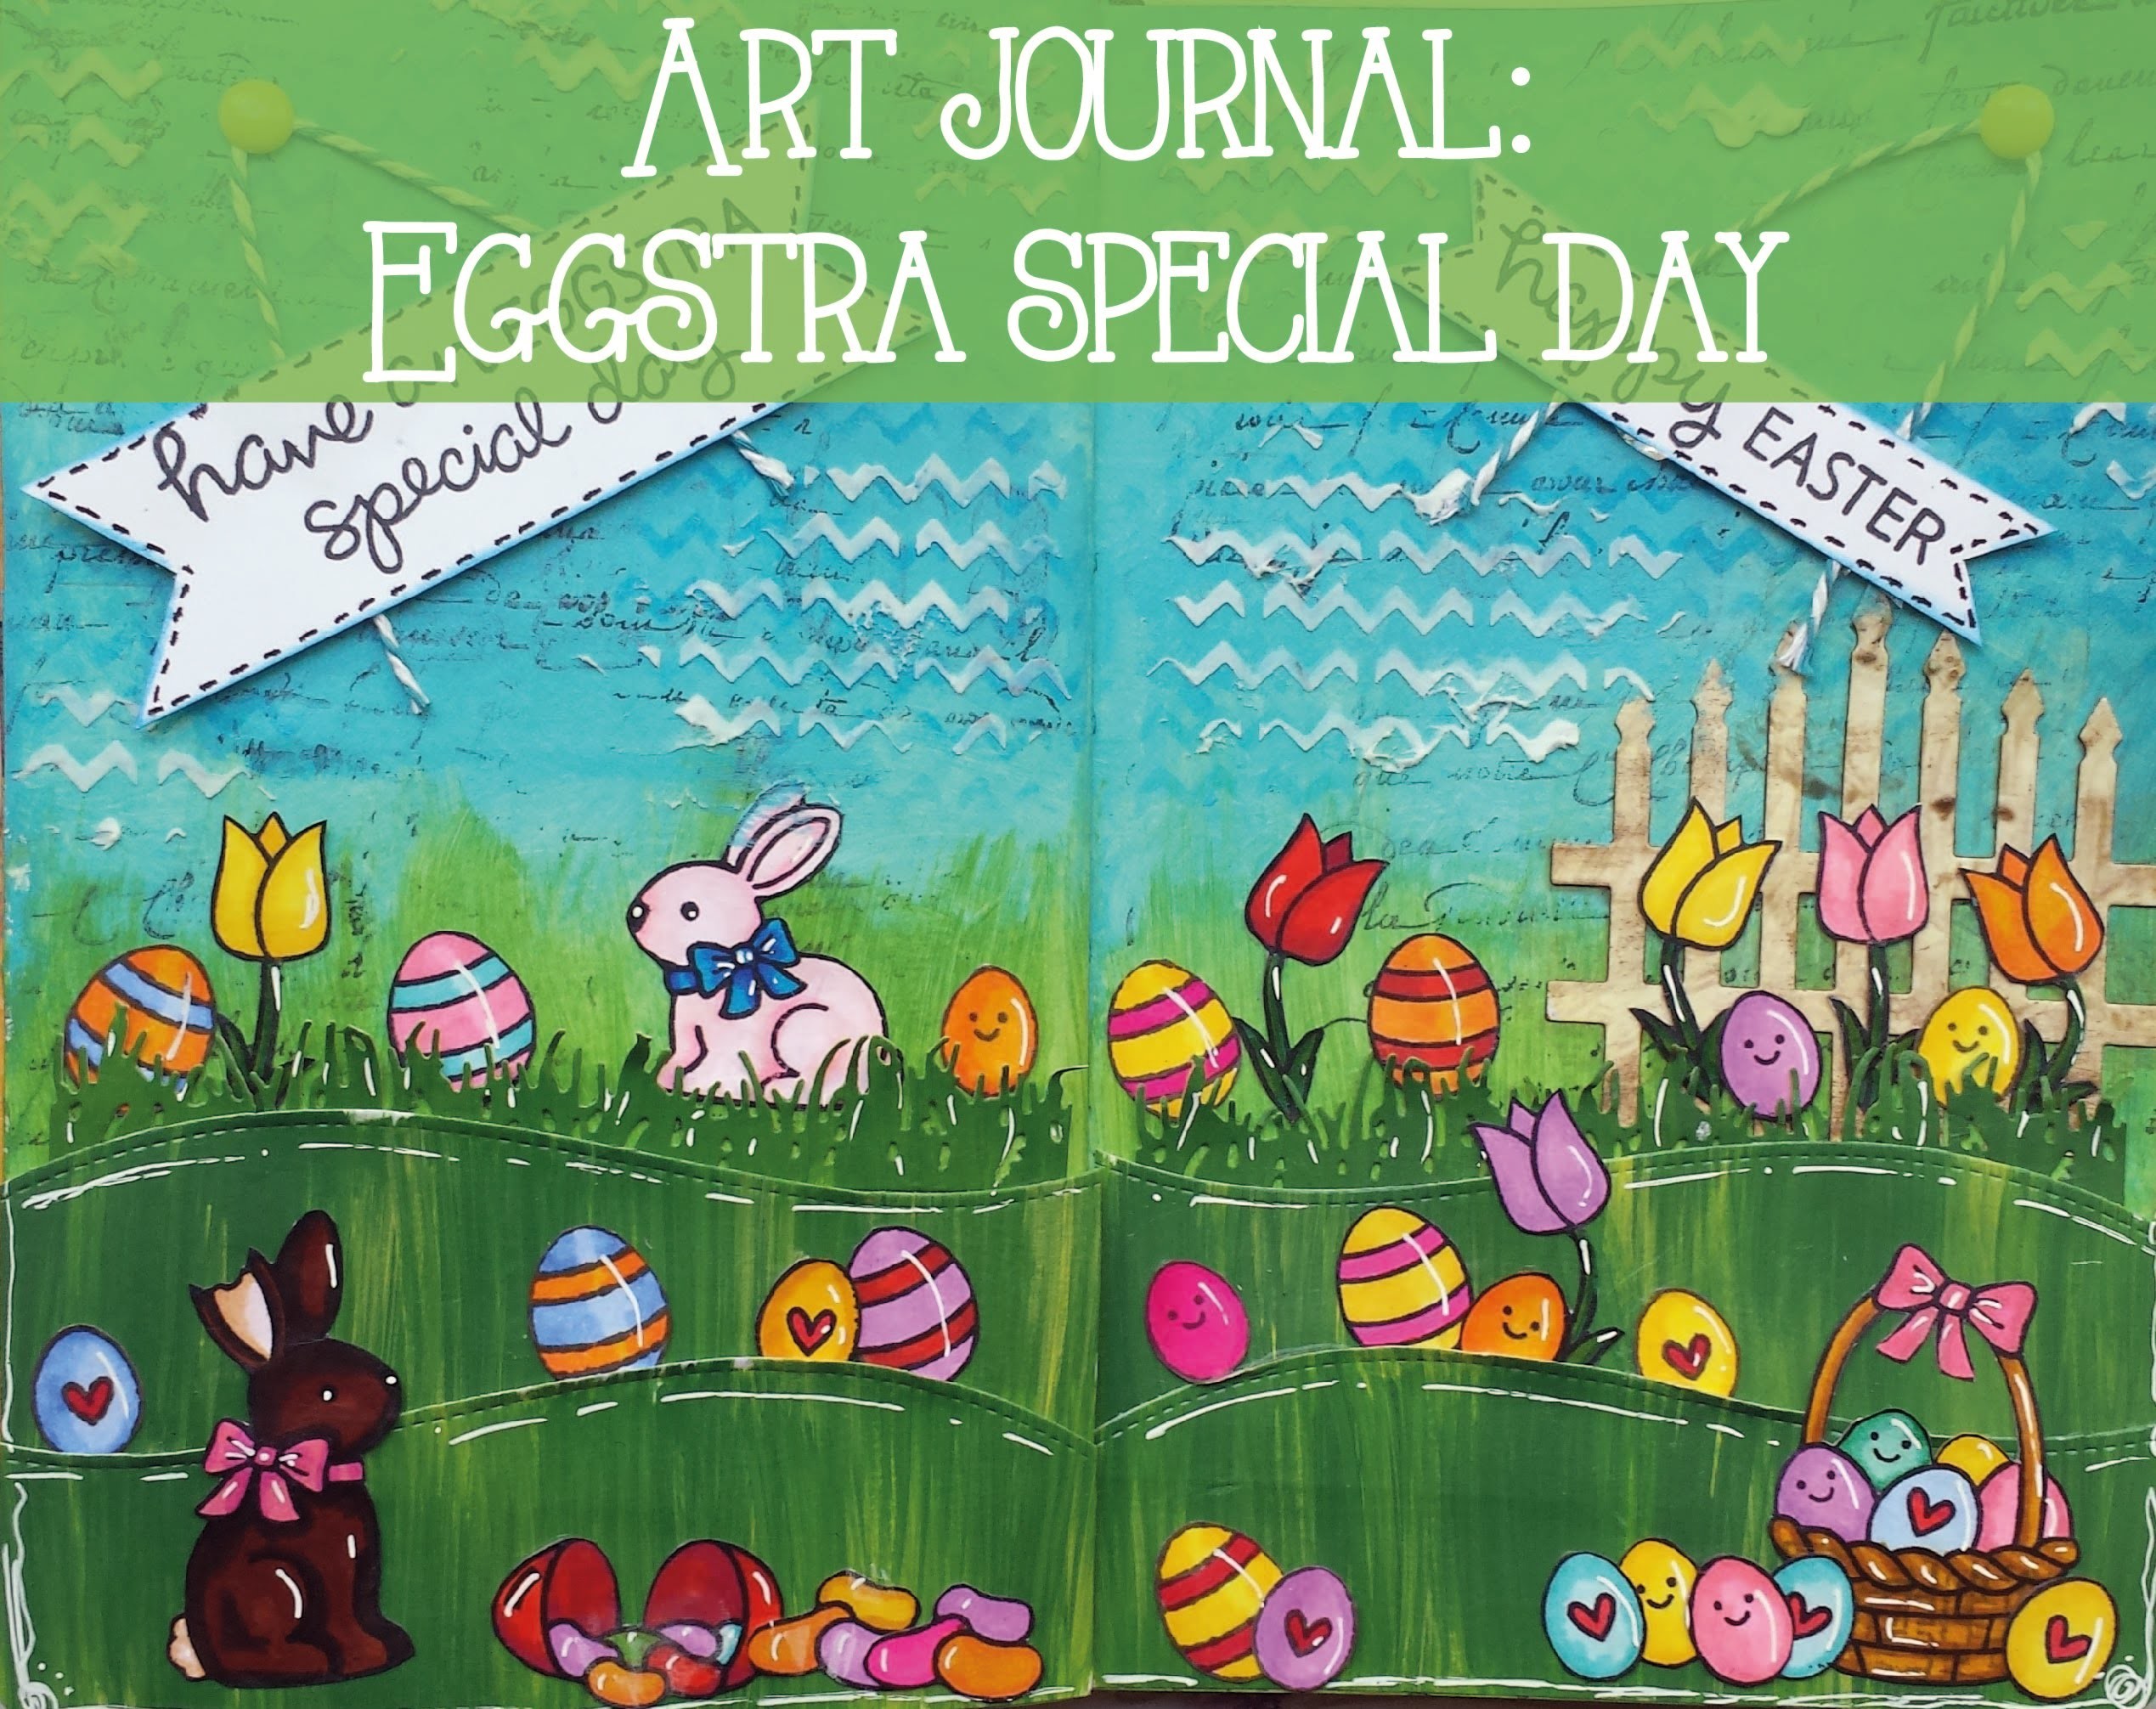 Art Journal: "Eggstra Special Day"